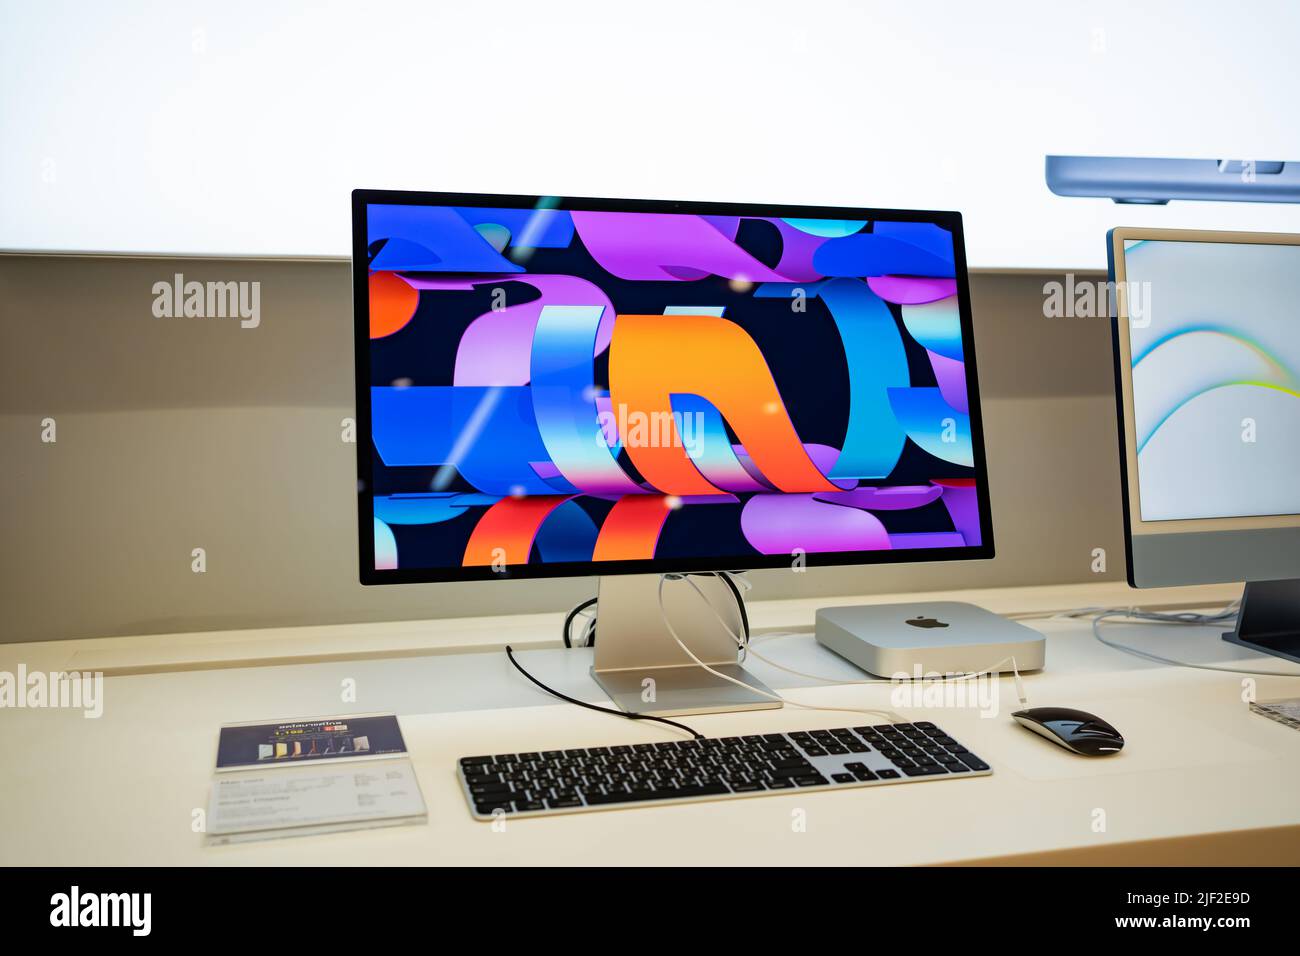 Bangkok, Thailand - May 22, 2022: Apple's Studio Display and Mac mini were displayed at iStudio shop. Stock Photo